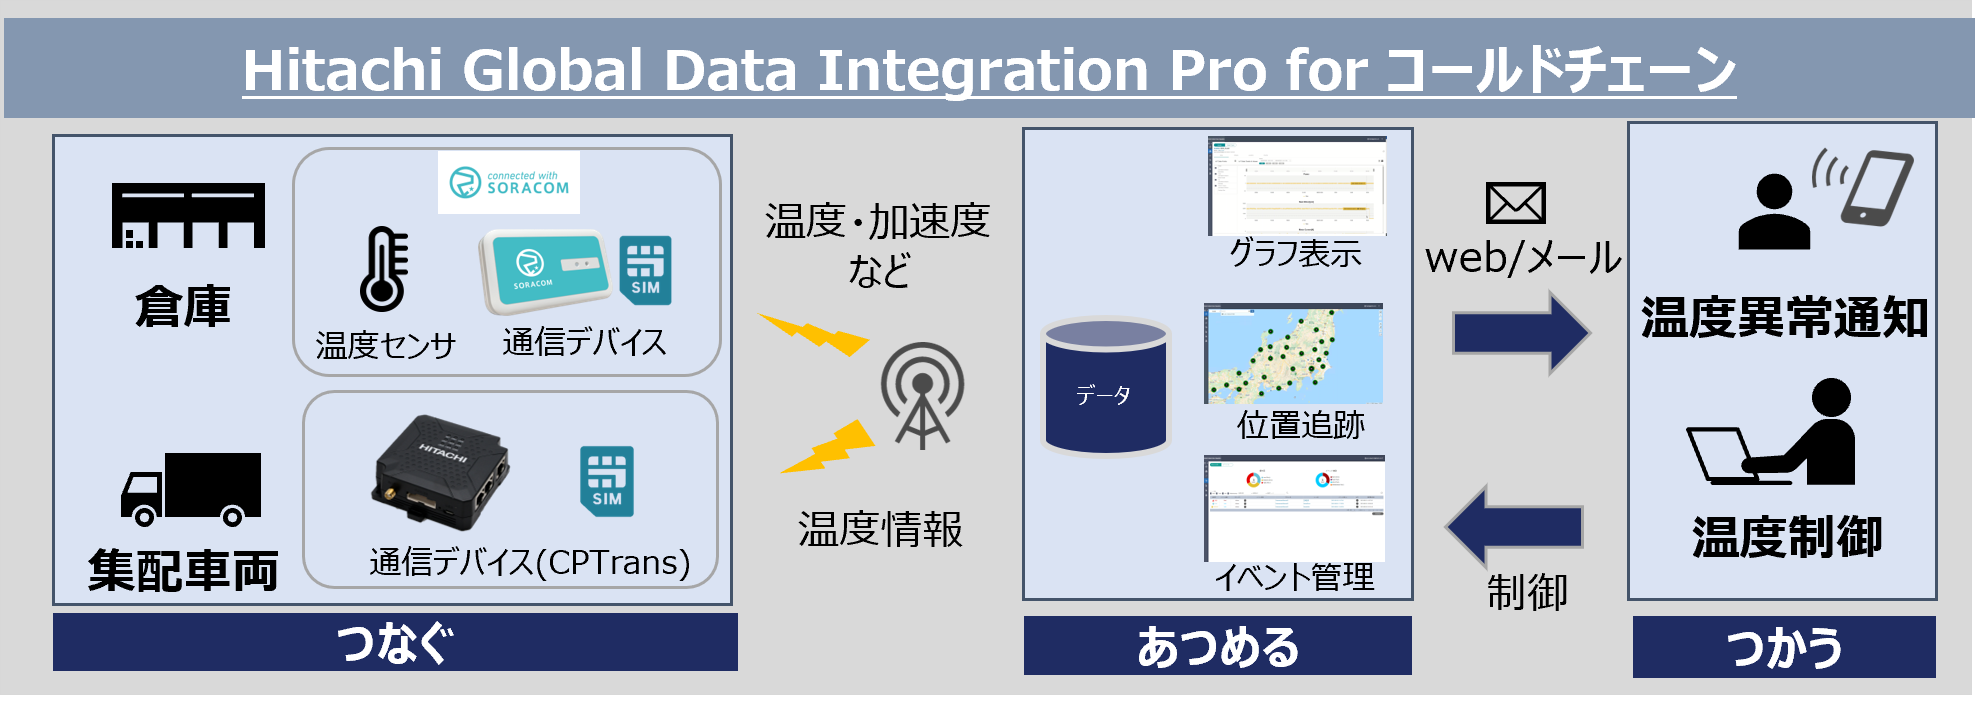 Hitachi Global Data Integration Pro